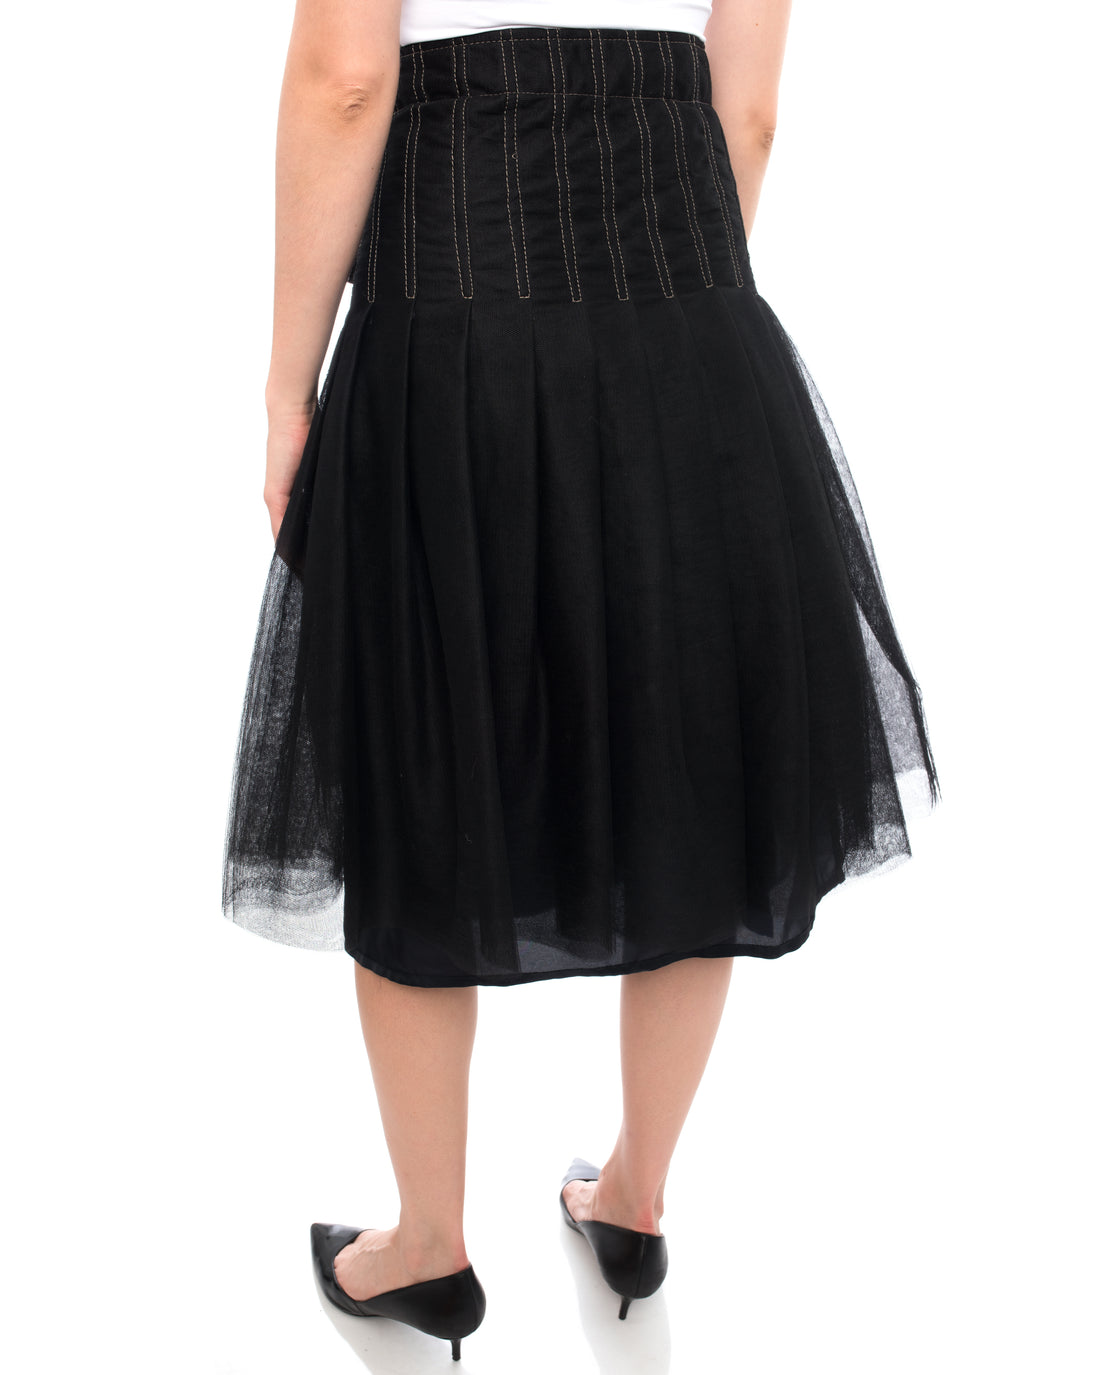 Junya Watanabe Comme des Garcons Black Tulle Mesh Skirt - L